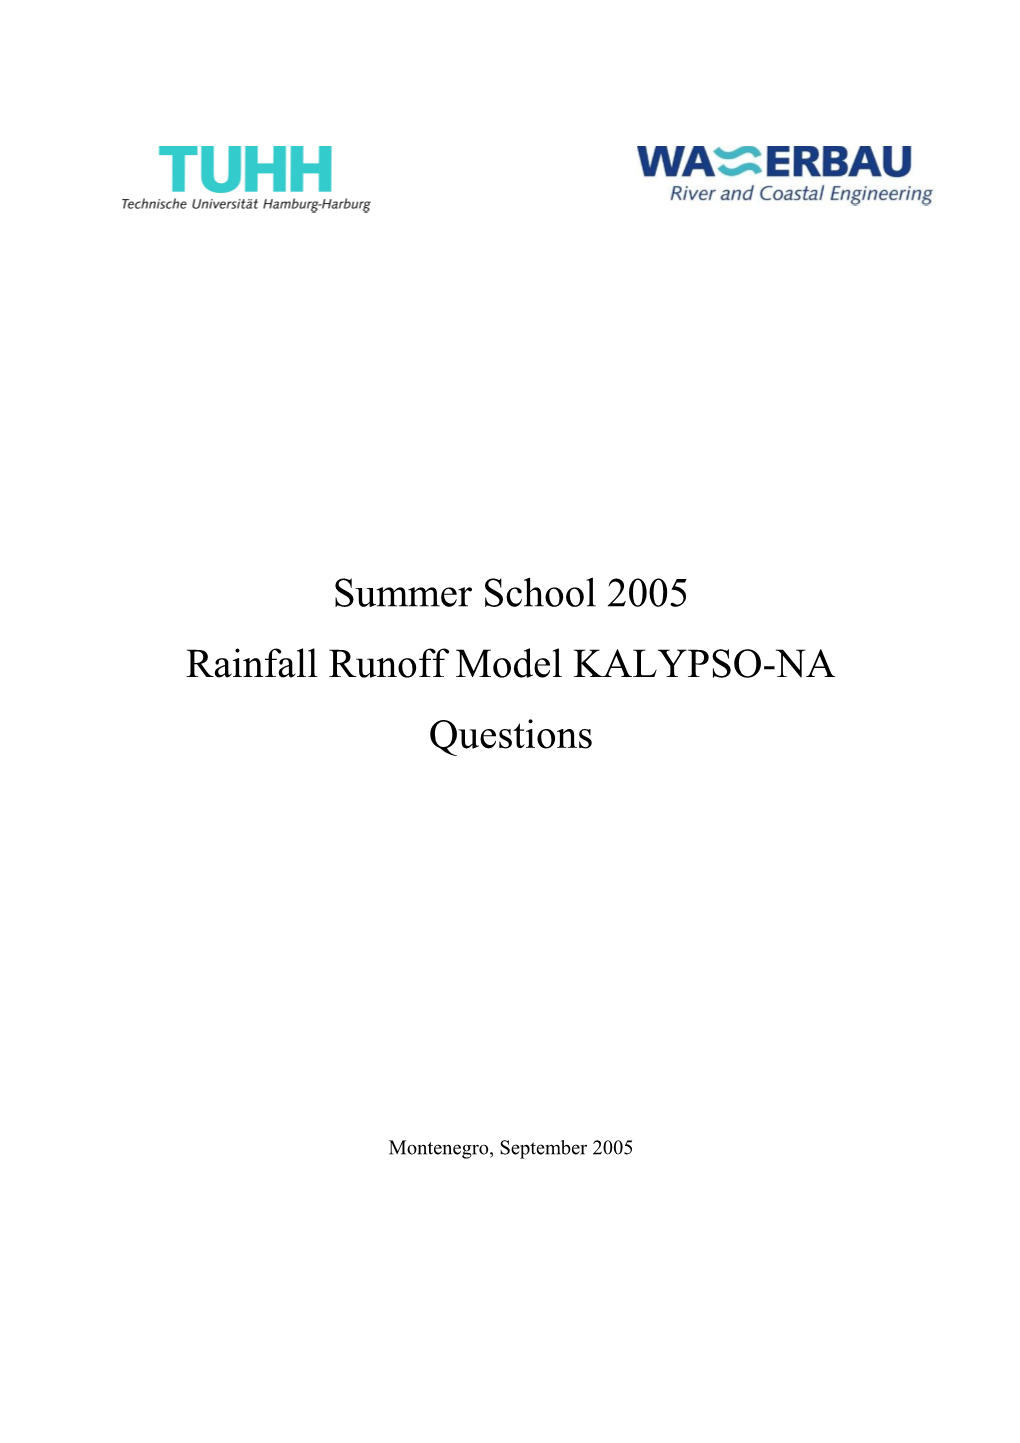 Rainfall Runoff Model KALYPSO-NA